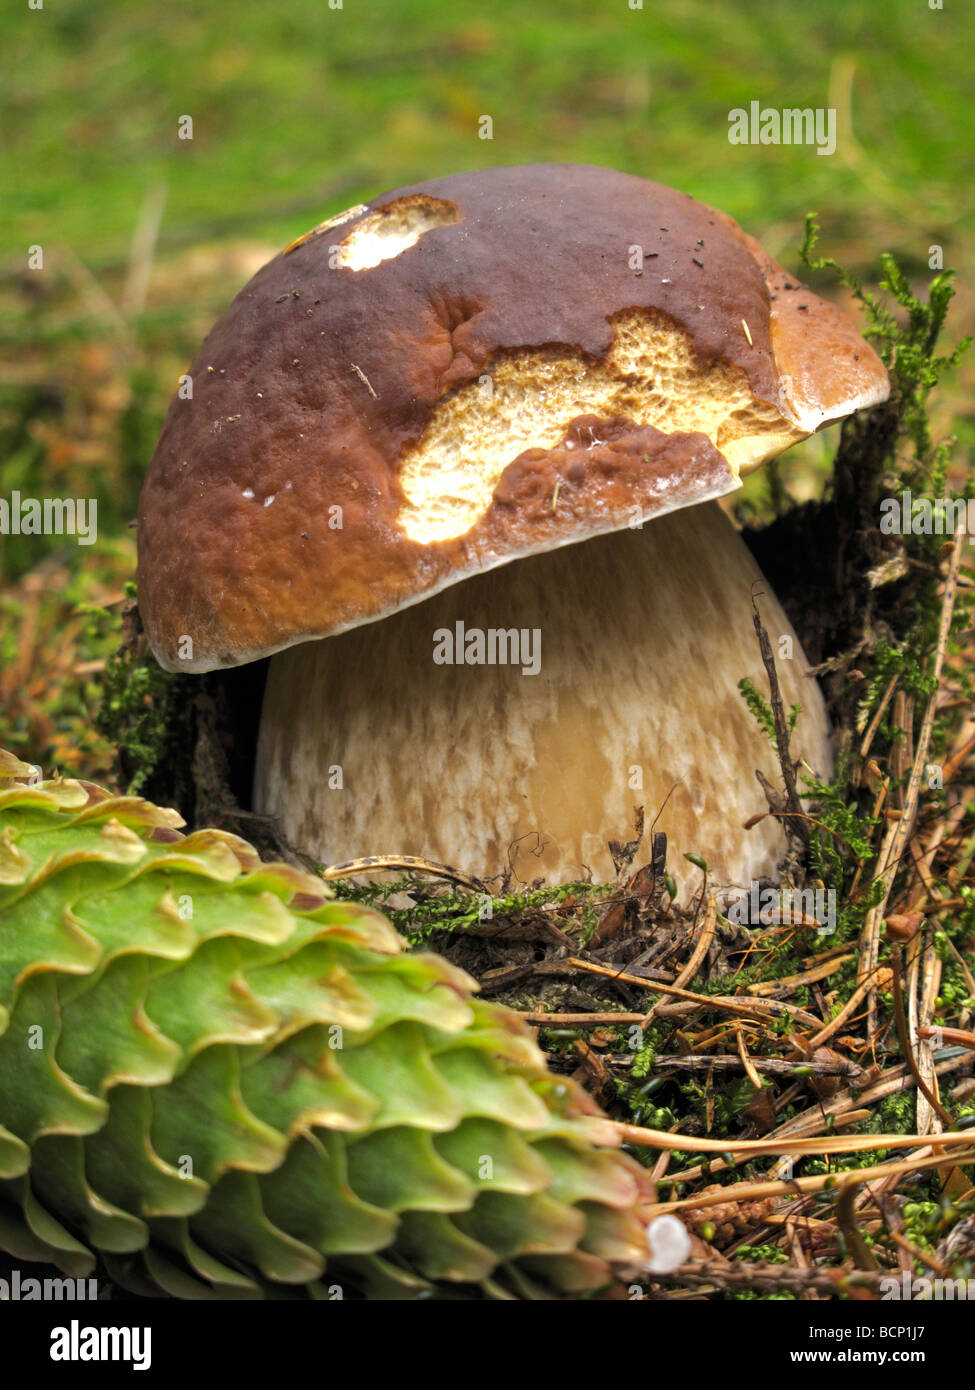 mushroom Boletus badius Forest mushroom in the grass Xerocomus badius Bay bolete Stock Photo